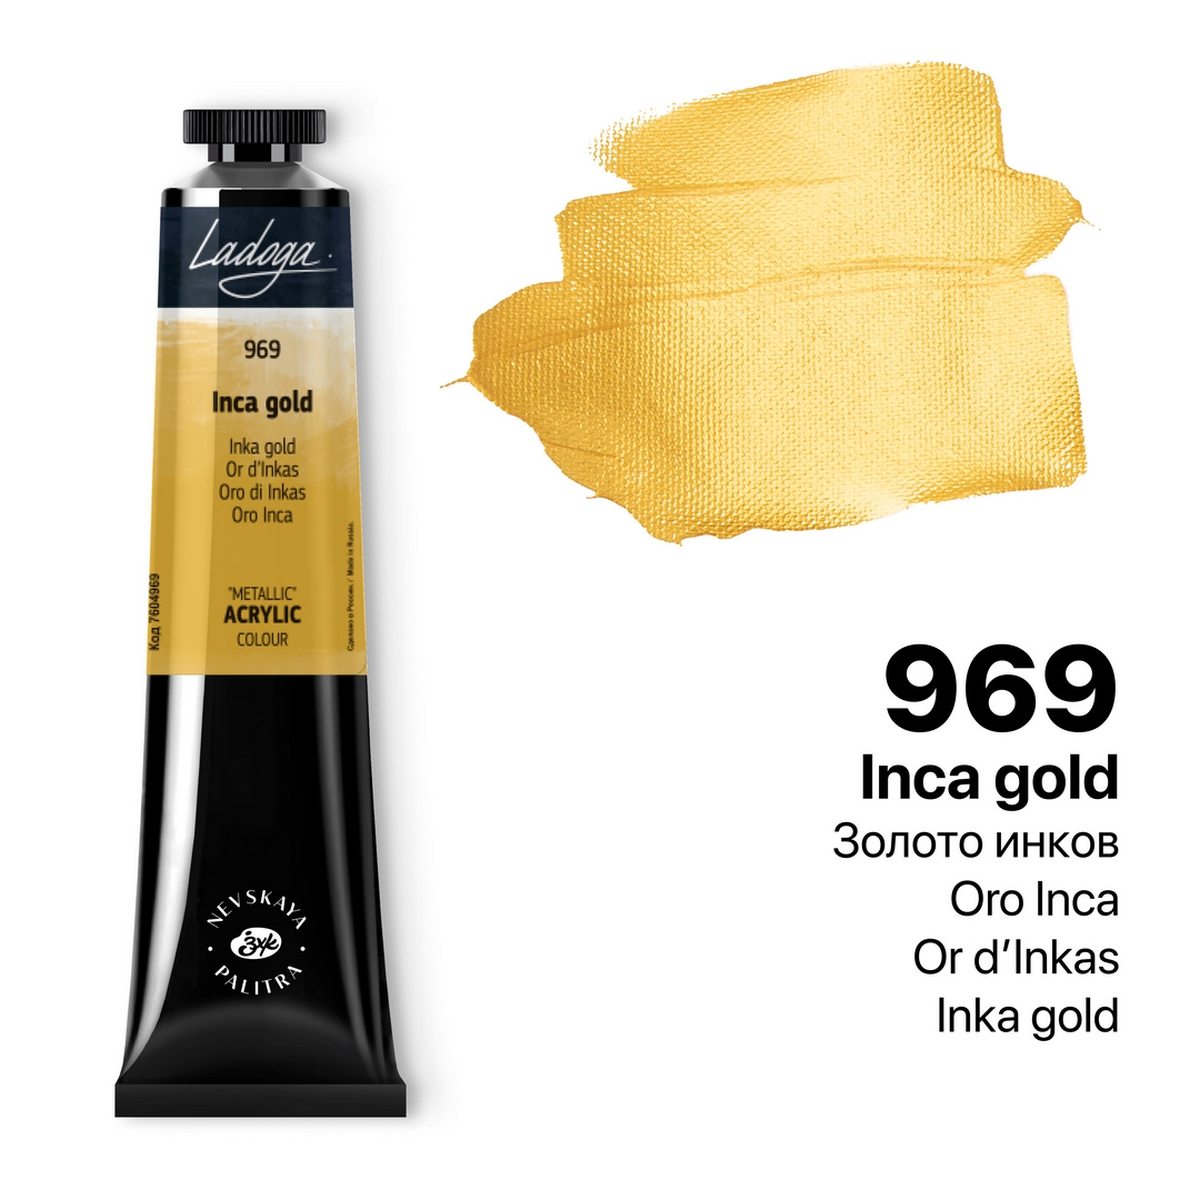 Acrylic colour Ladoga, Inca Gold Metallic, № 969